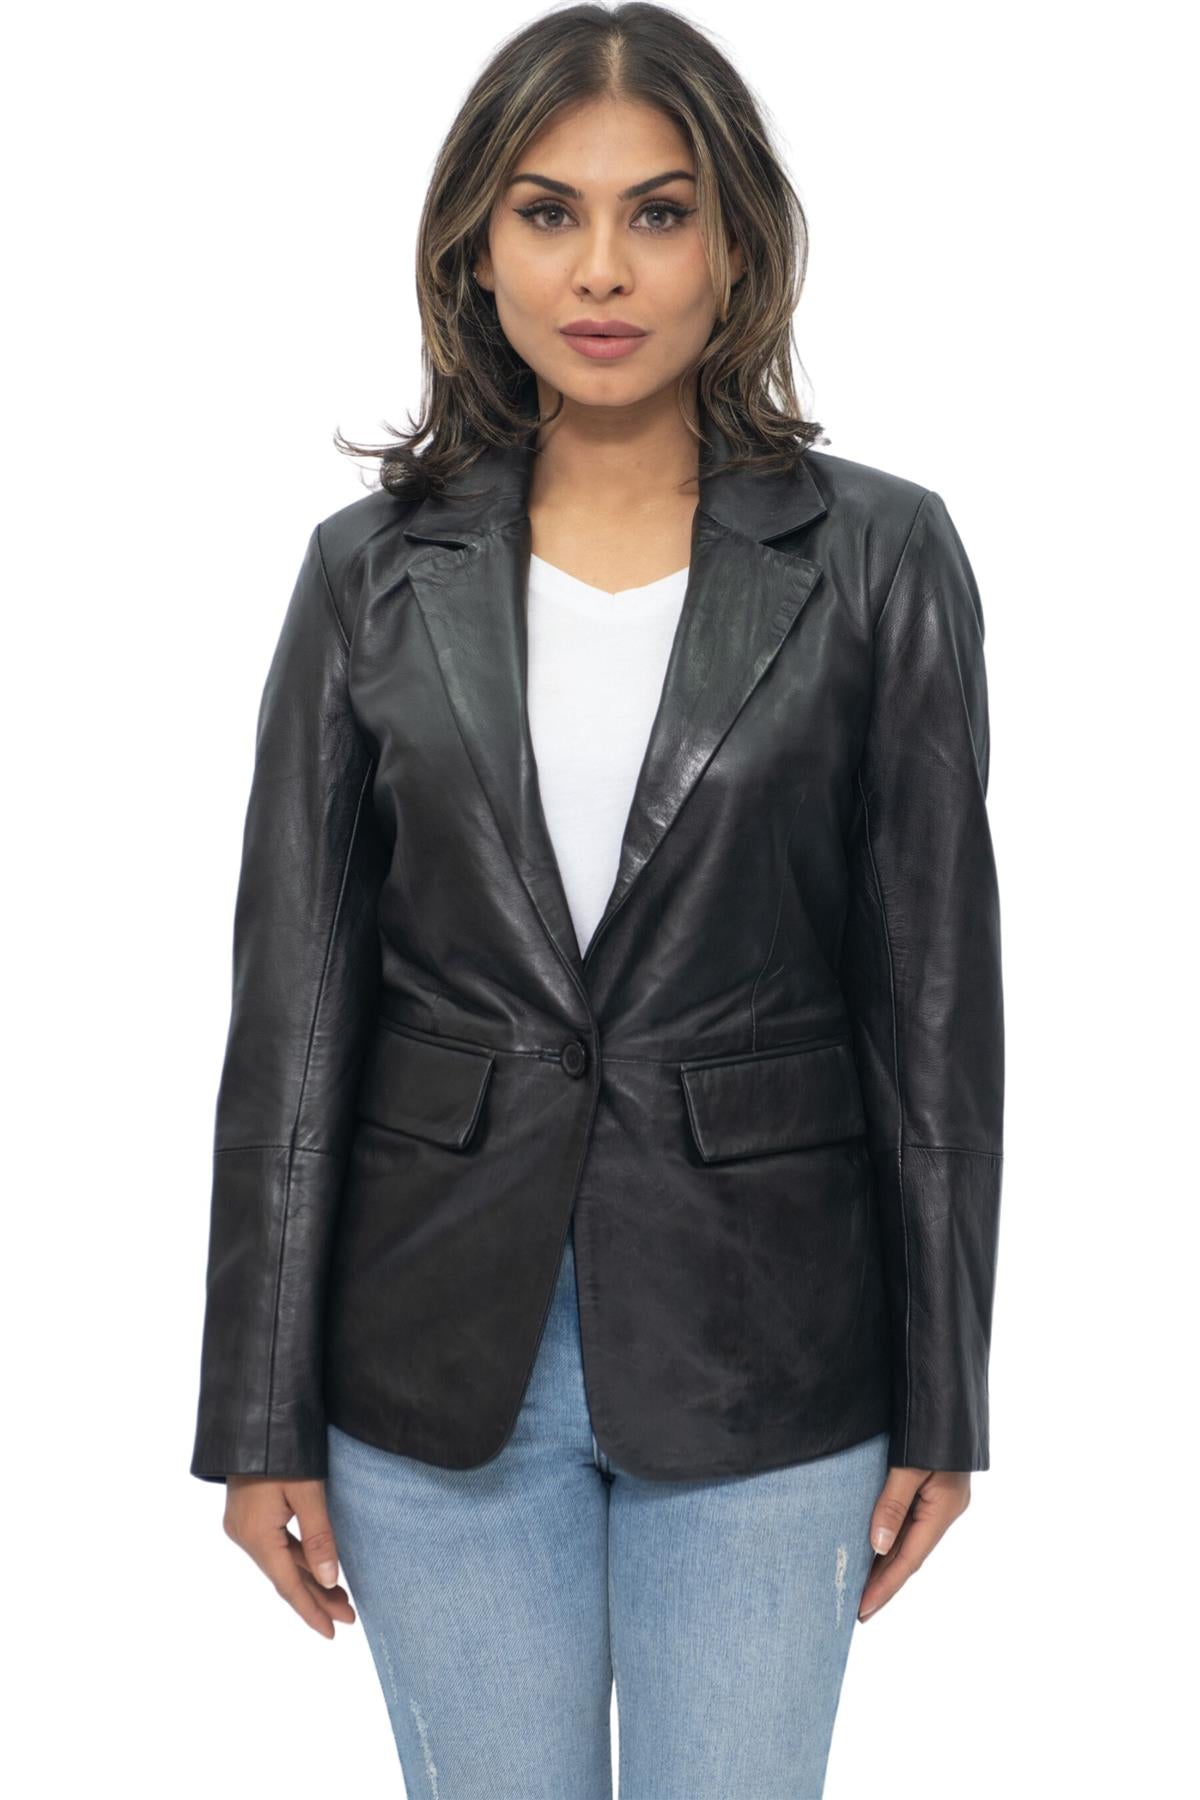 Womens Soft Leather Blazer Jacket-Apeldoorn